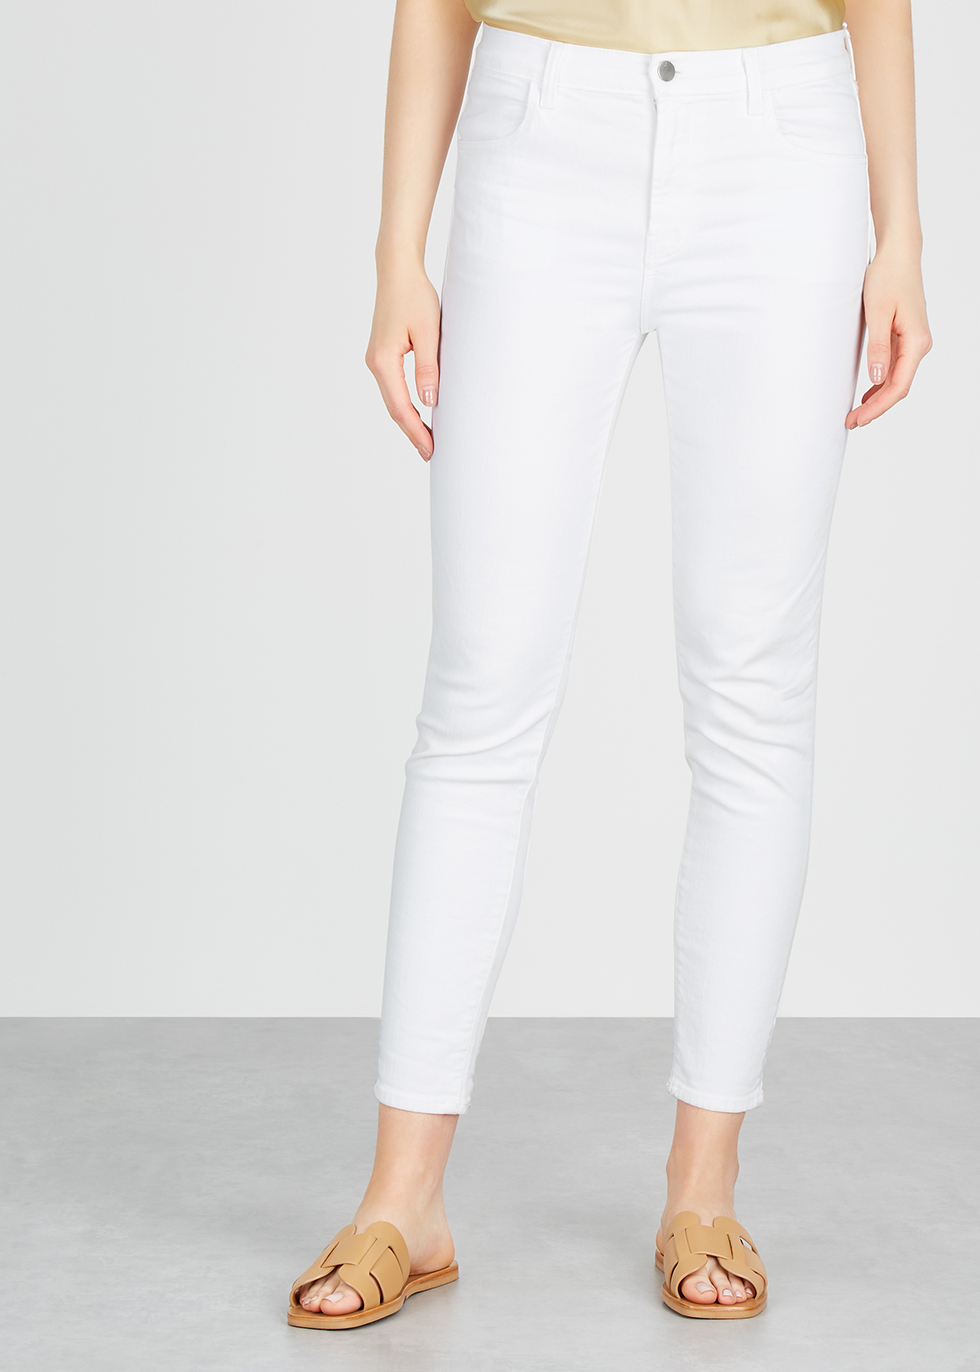 j brand jeans white